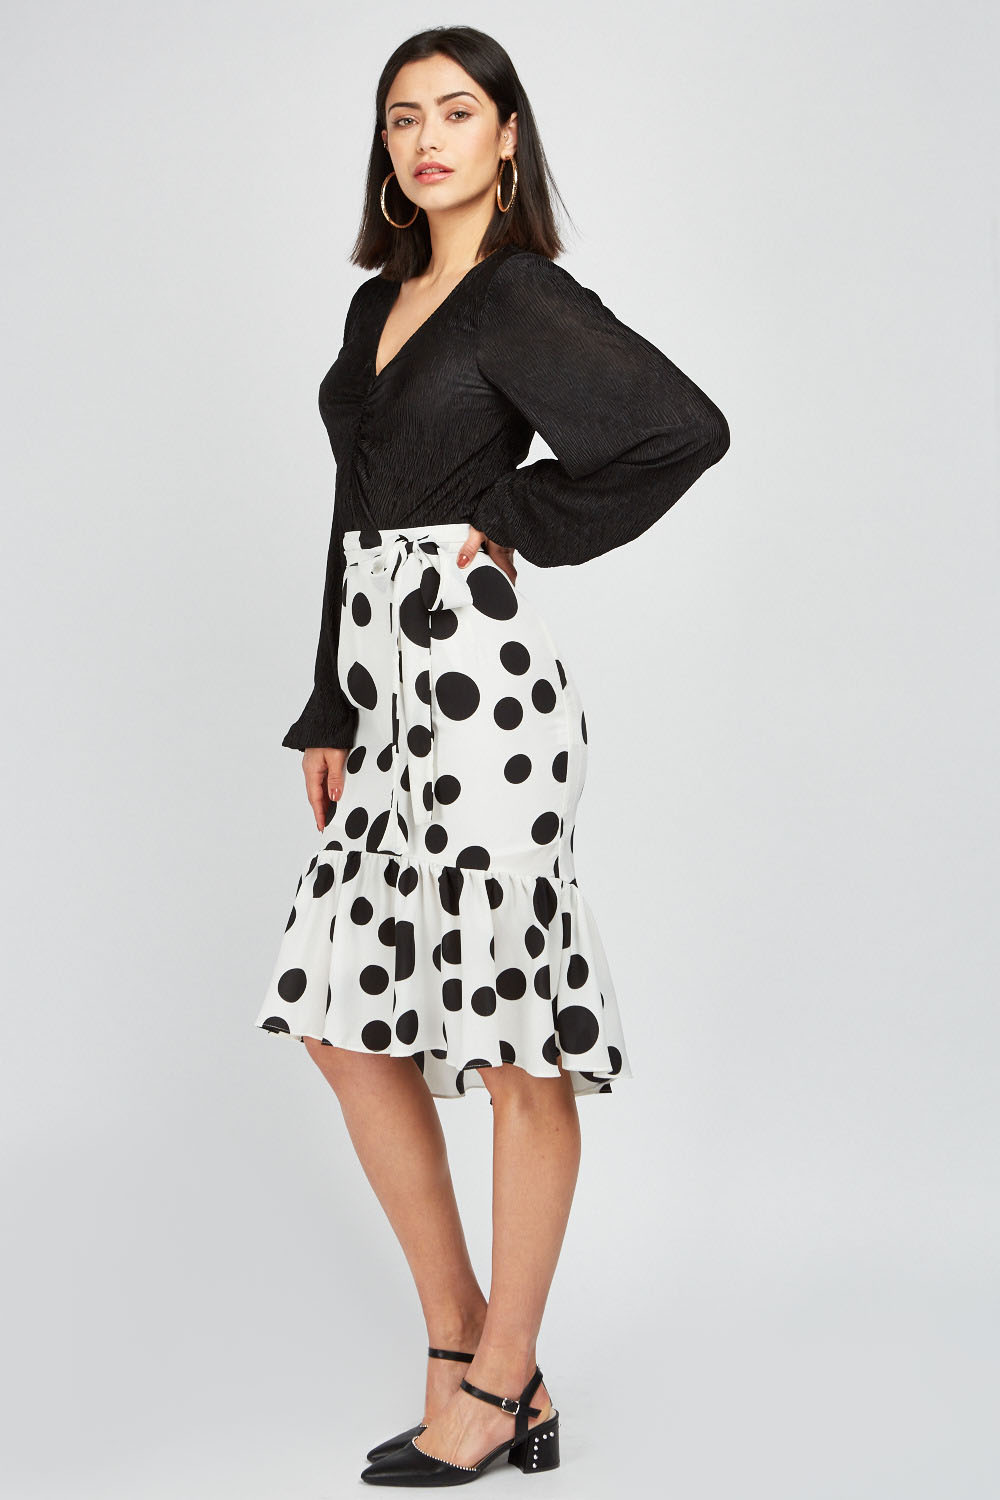 Ruffle Polka Dot Print Skirt - Just $6